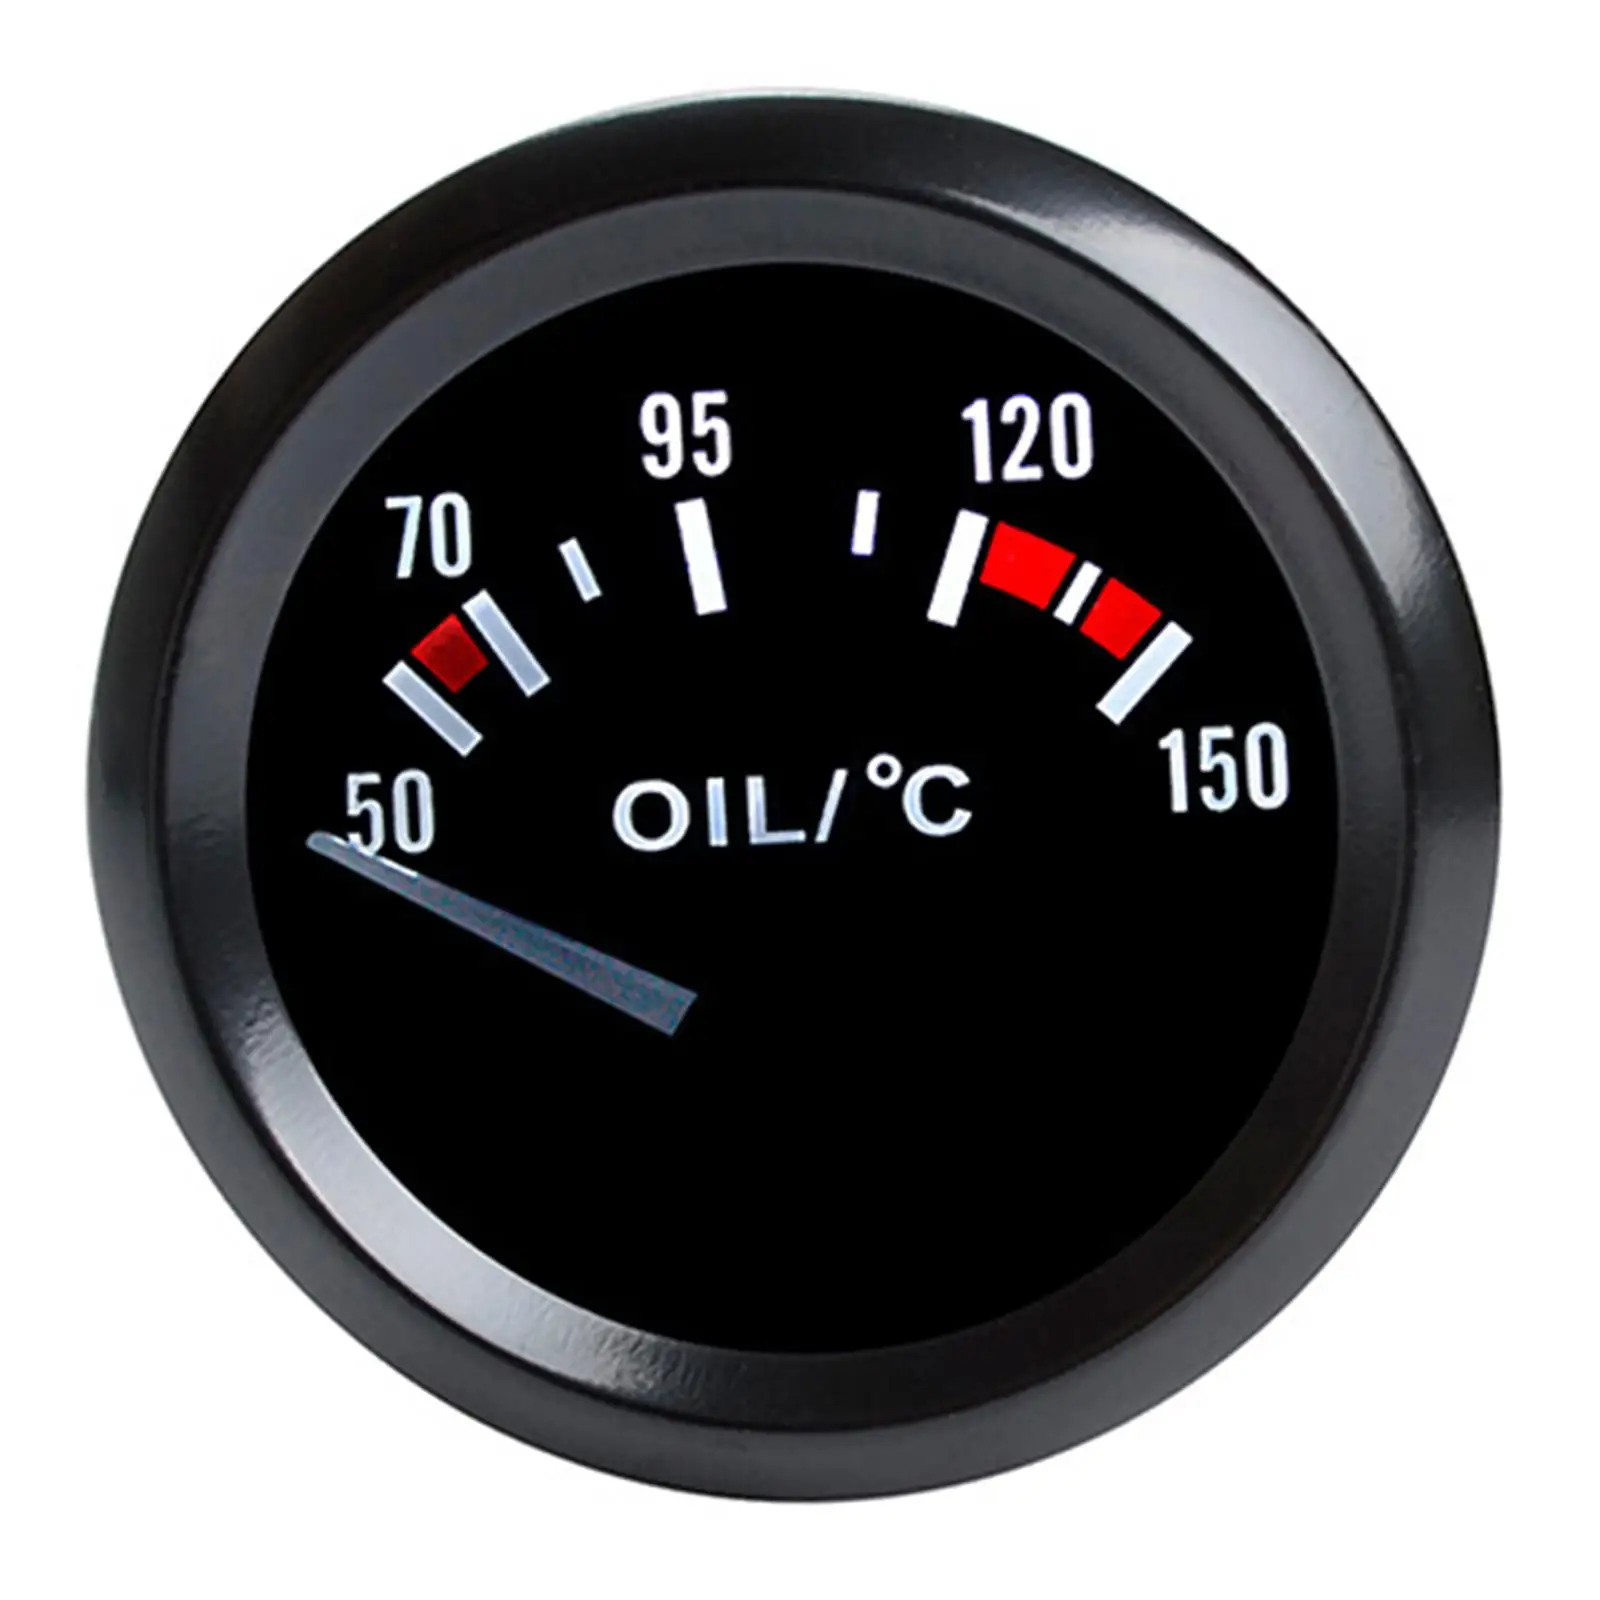 Oil Temp Gauge Car Accessories 2 inch High Performance Replaces Oil Temperature Gauge Car Oil Temp Gauge Meter 52mm for Car